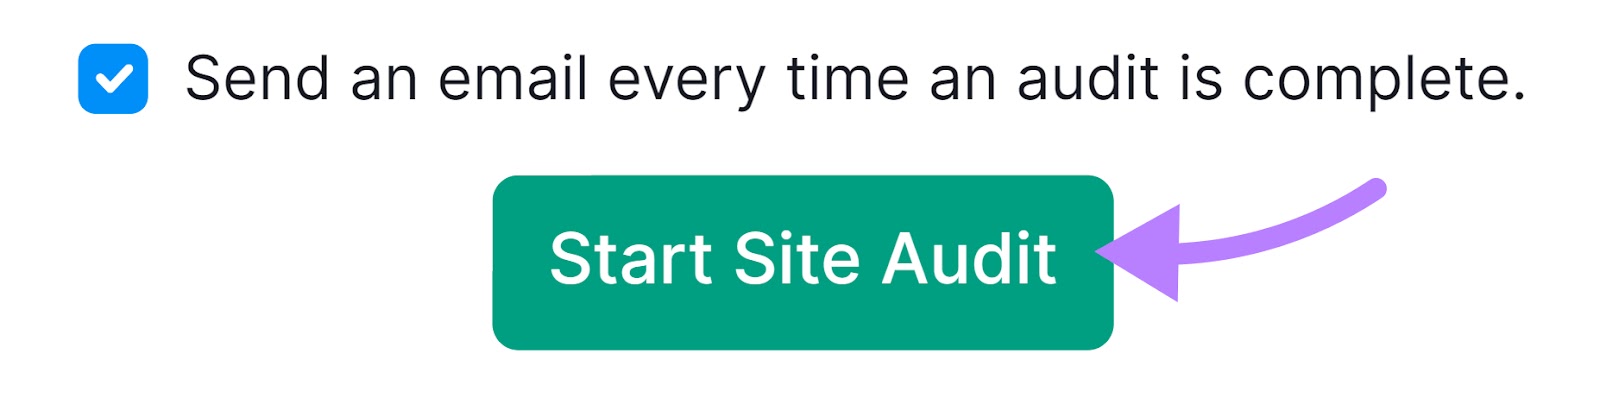 “Start Site Audit” button